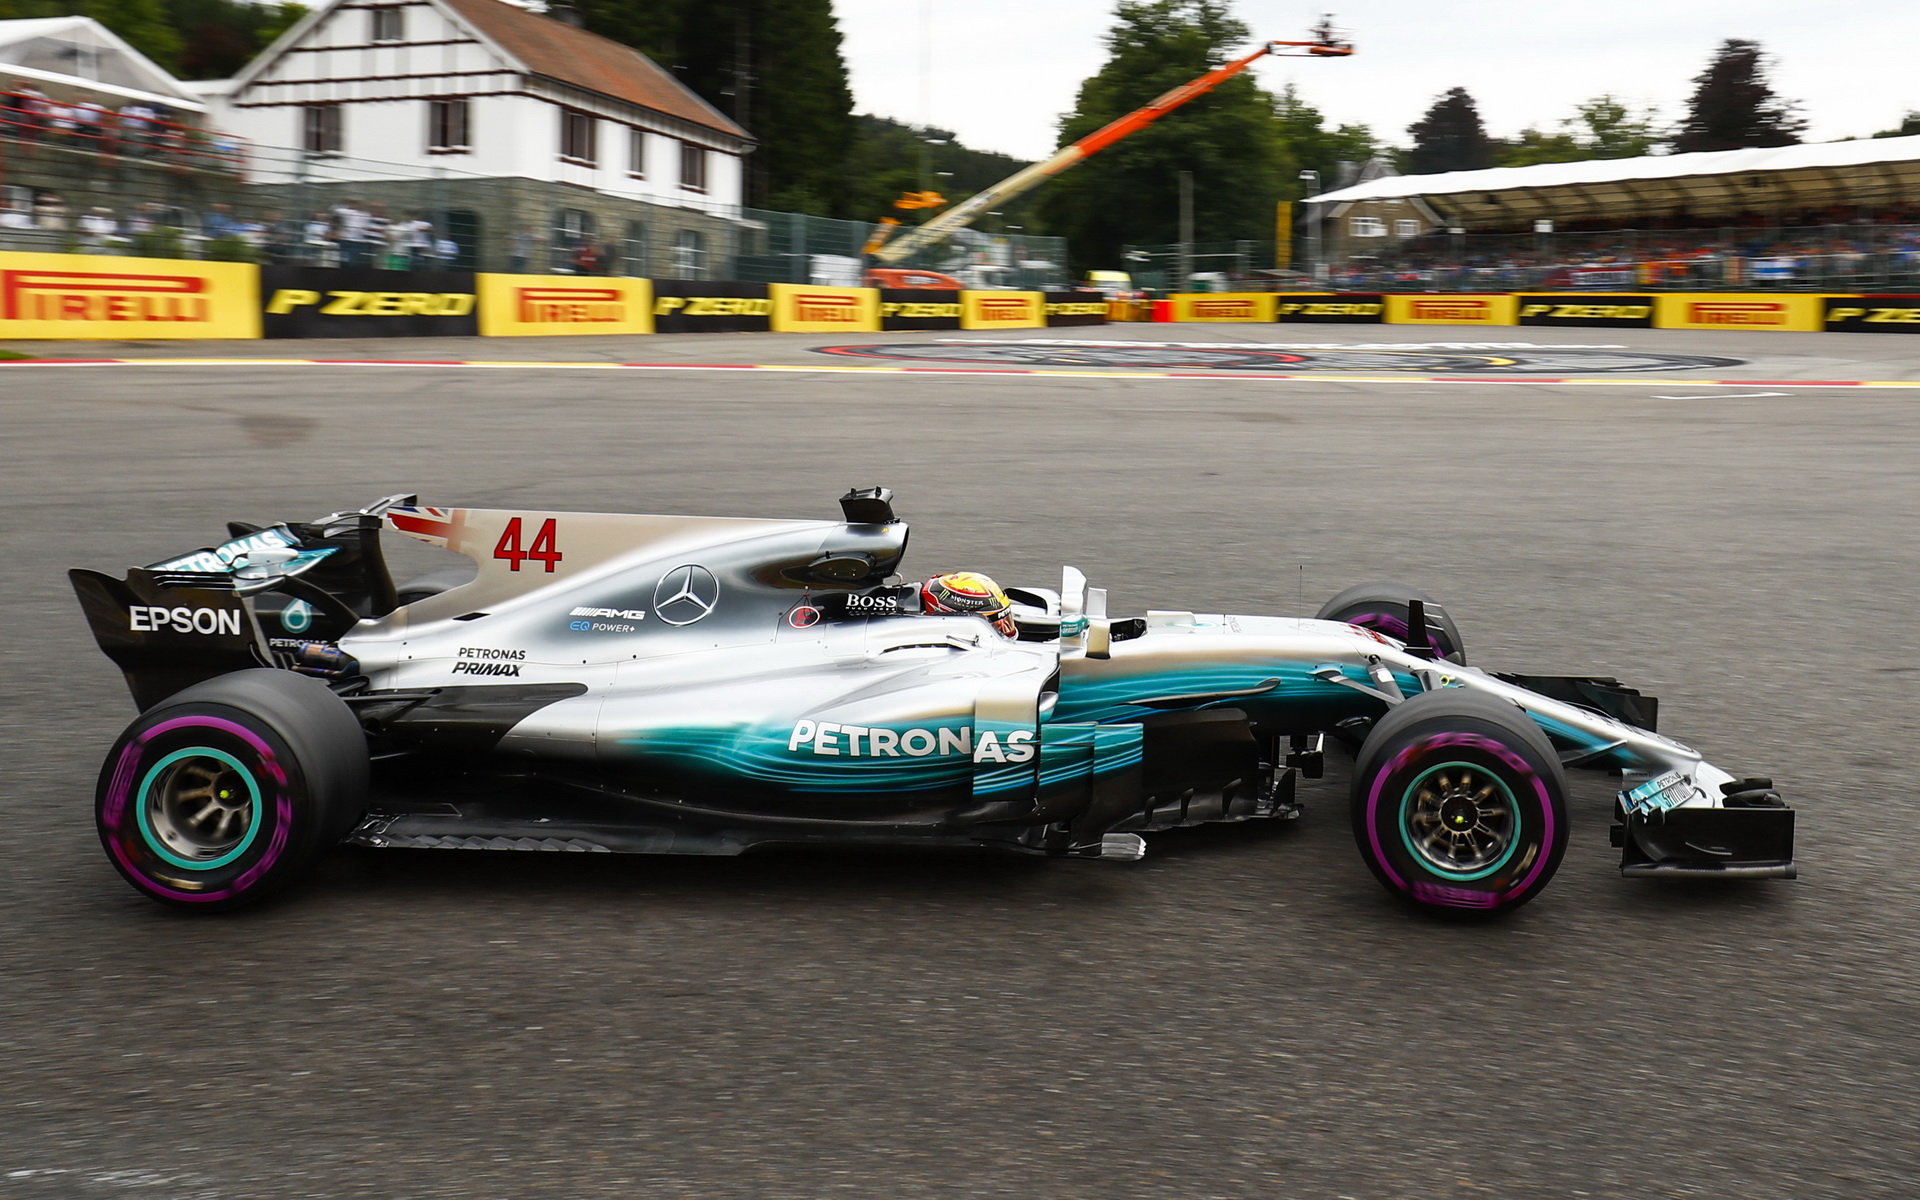 Lewis Hamilton v Belgii překonal traťový rekord